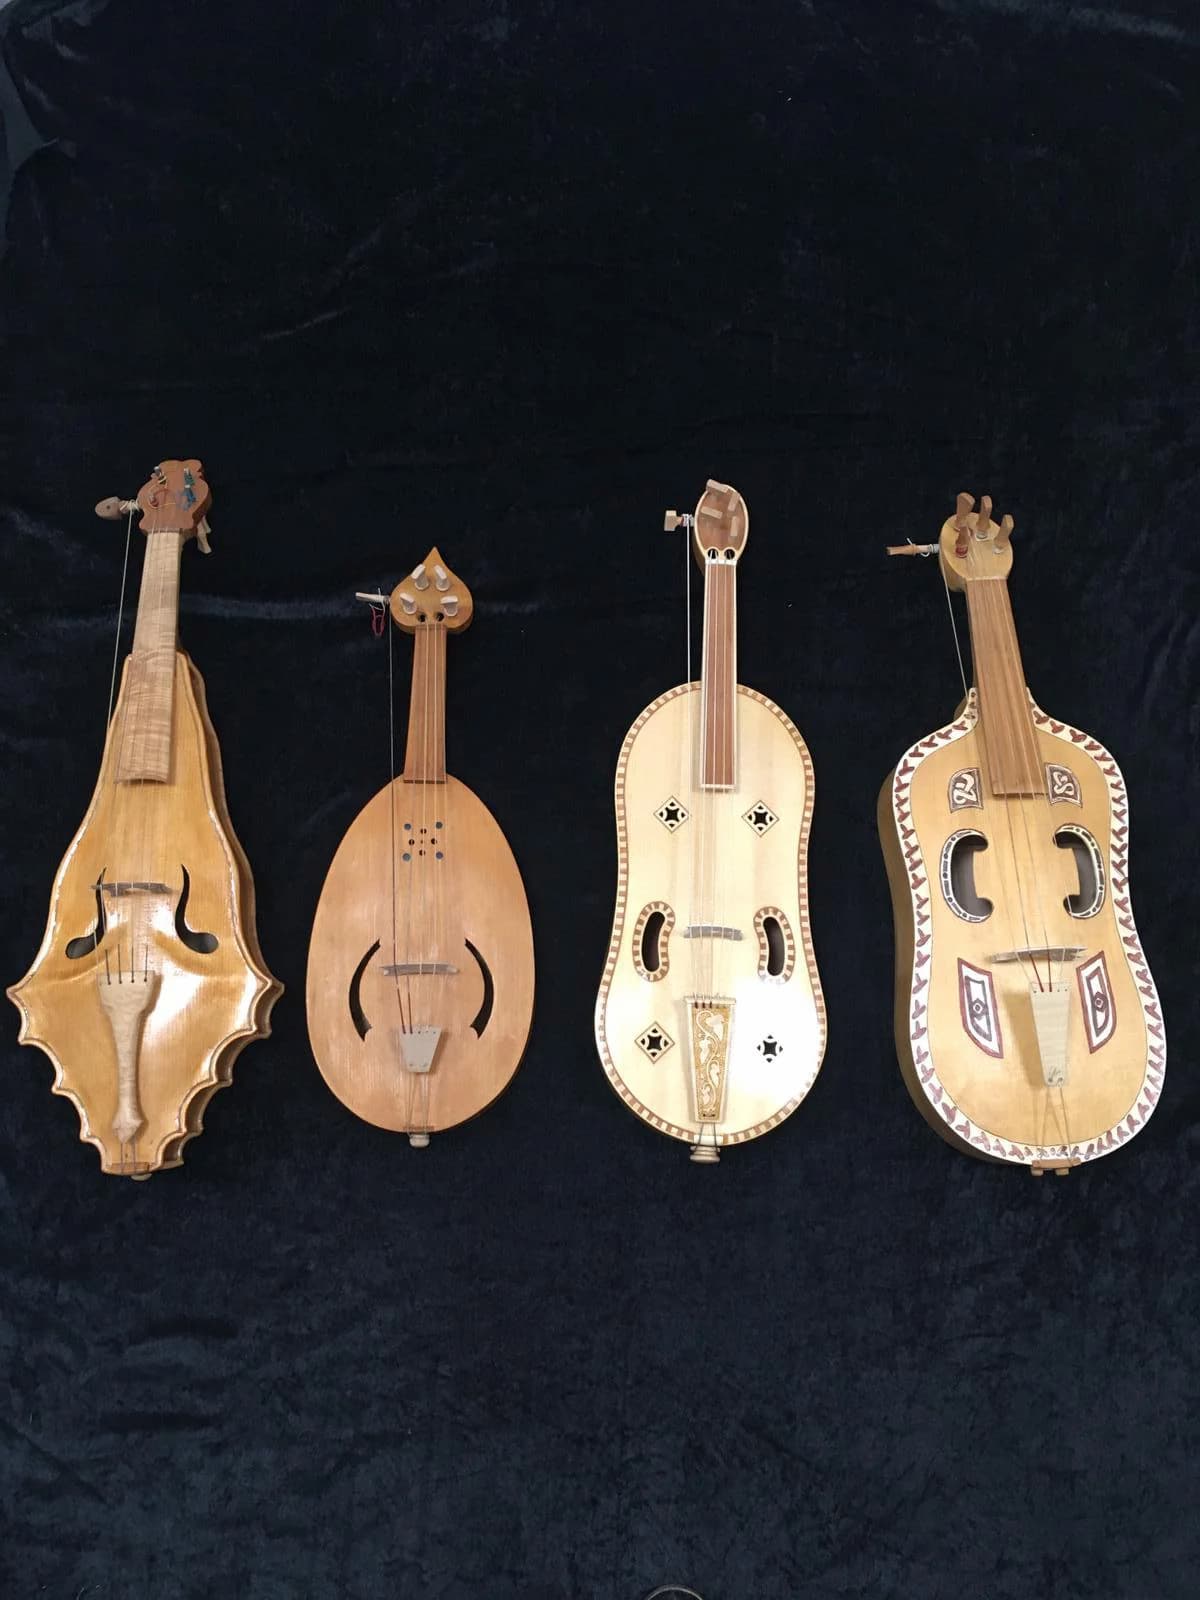 Medieval violin - The Vielle